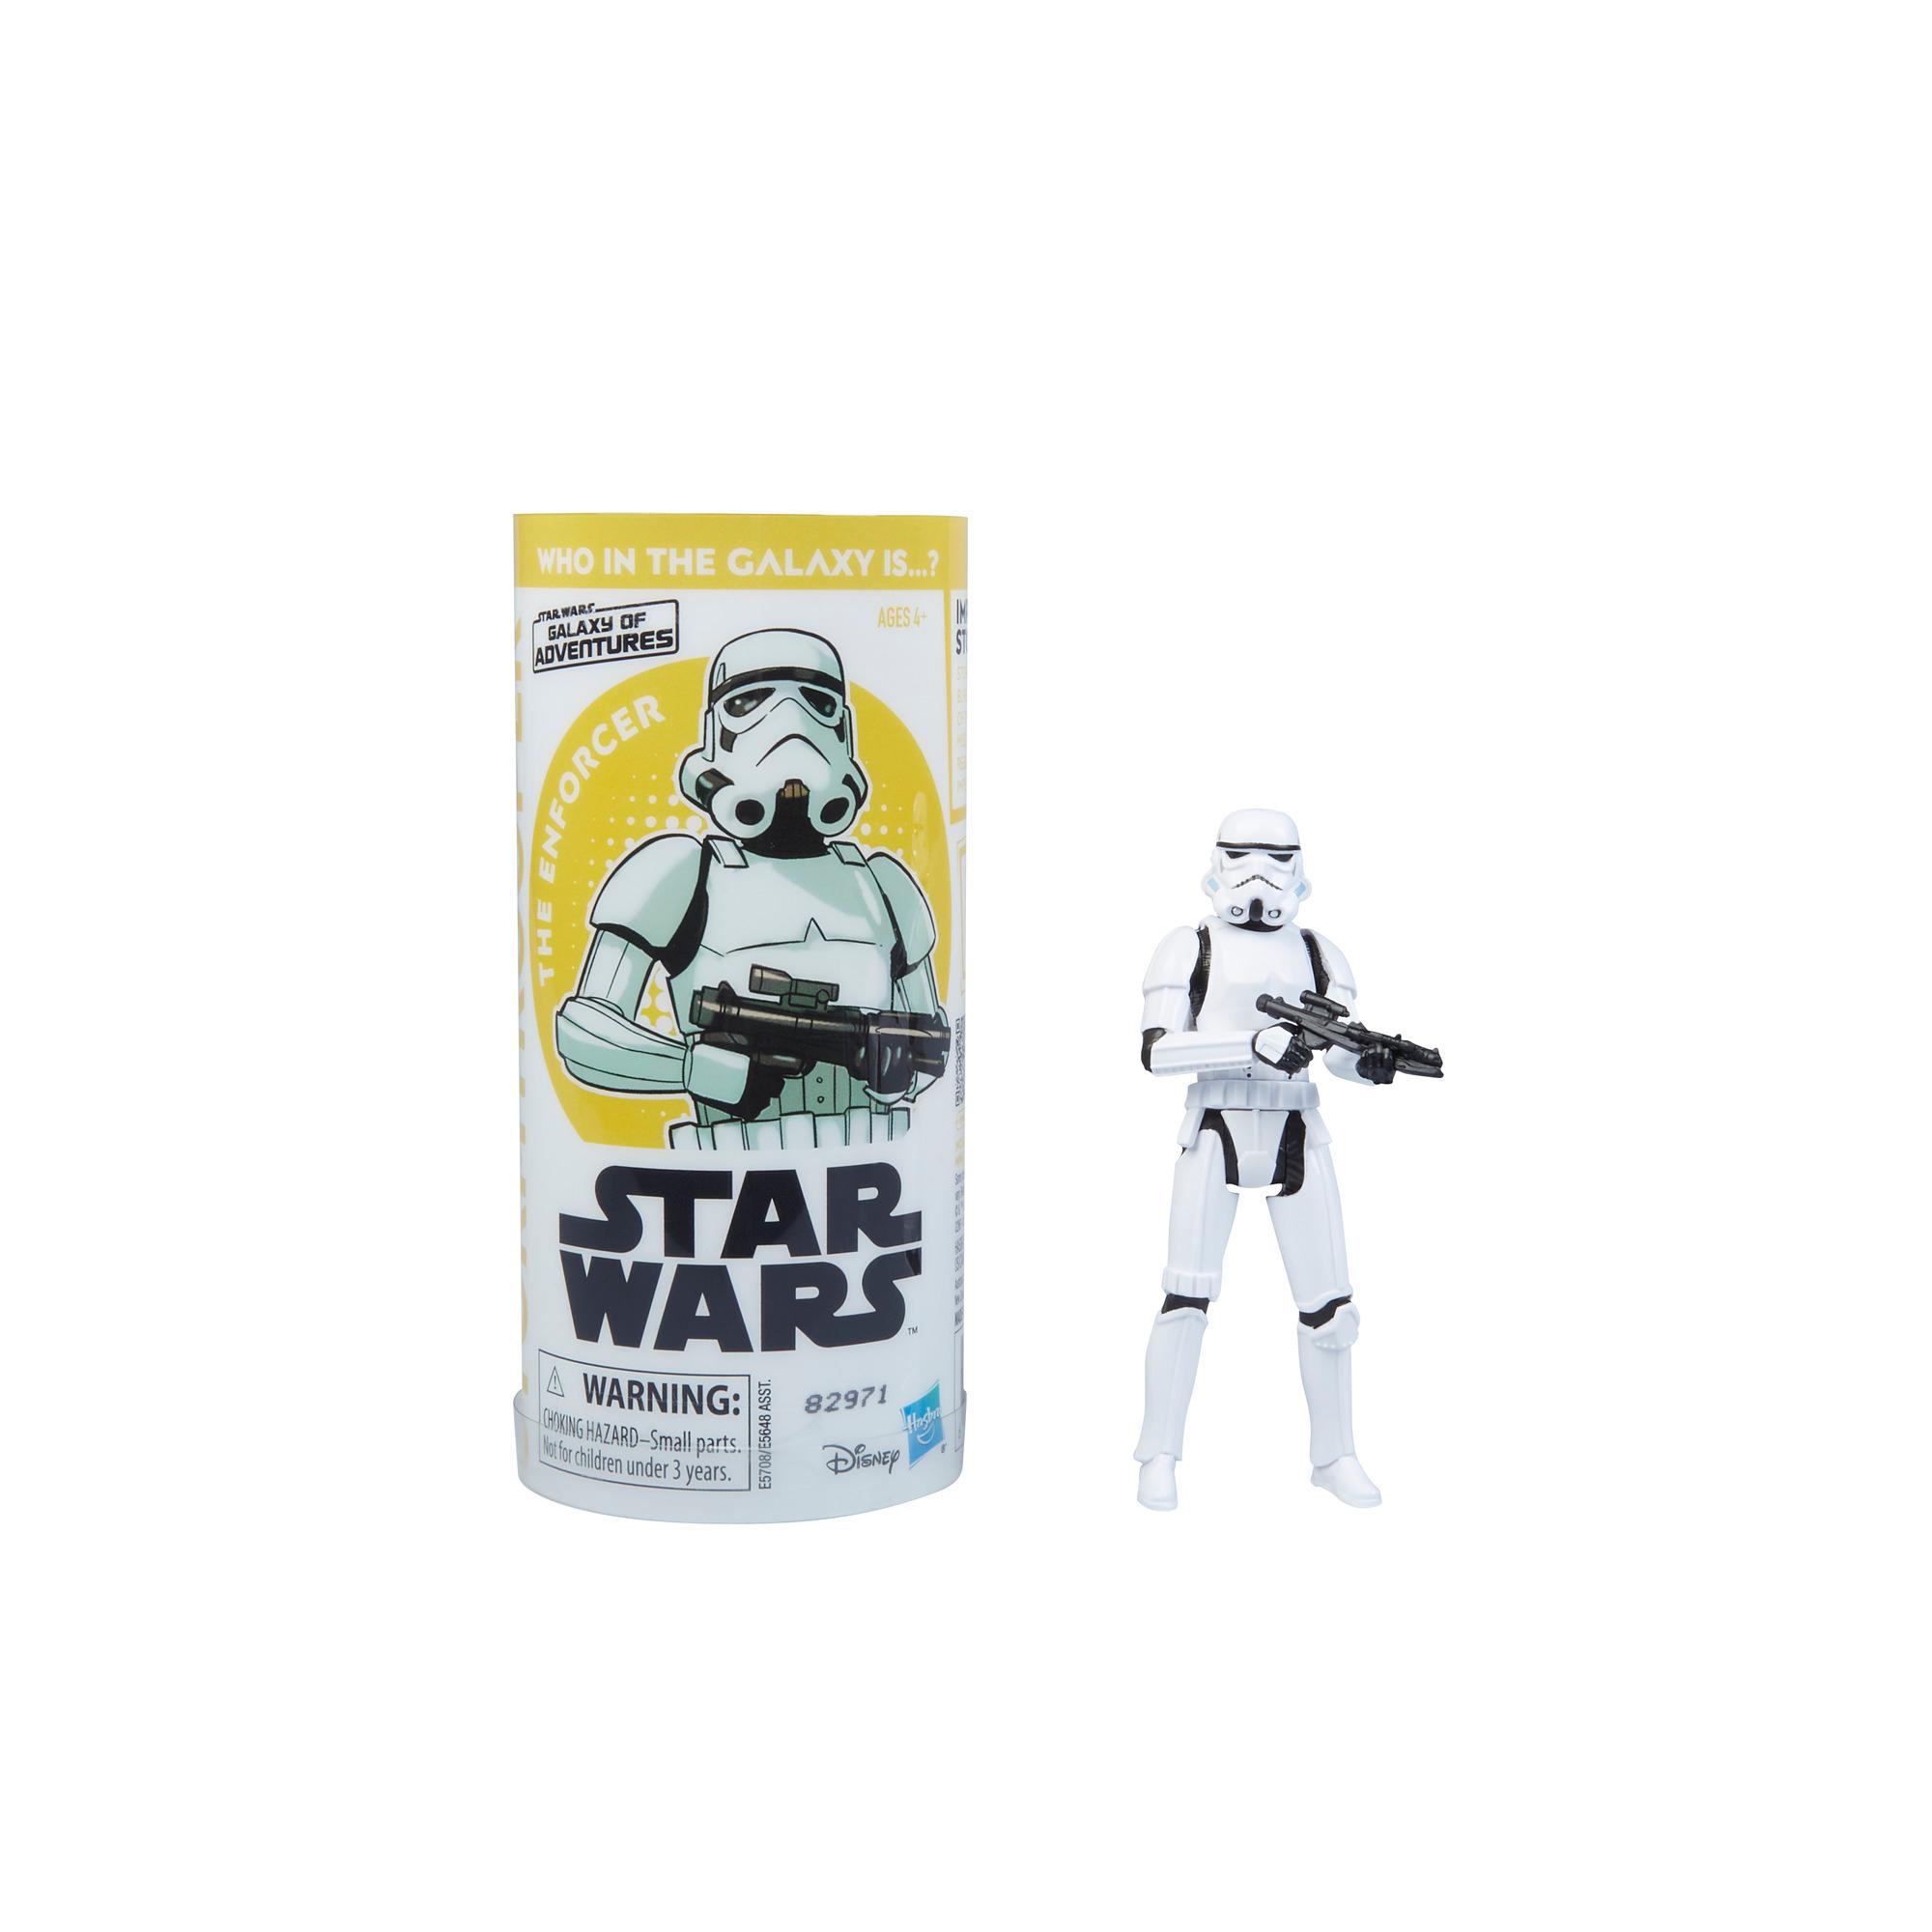 Star Wars Galaxy of Adventures Imperial Stormtrooper Figure & Mini Comic Hasbro E5708